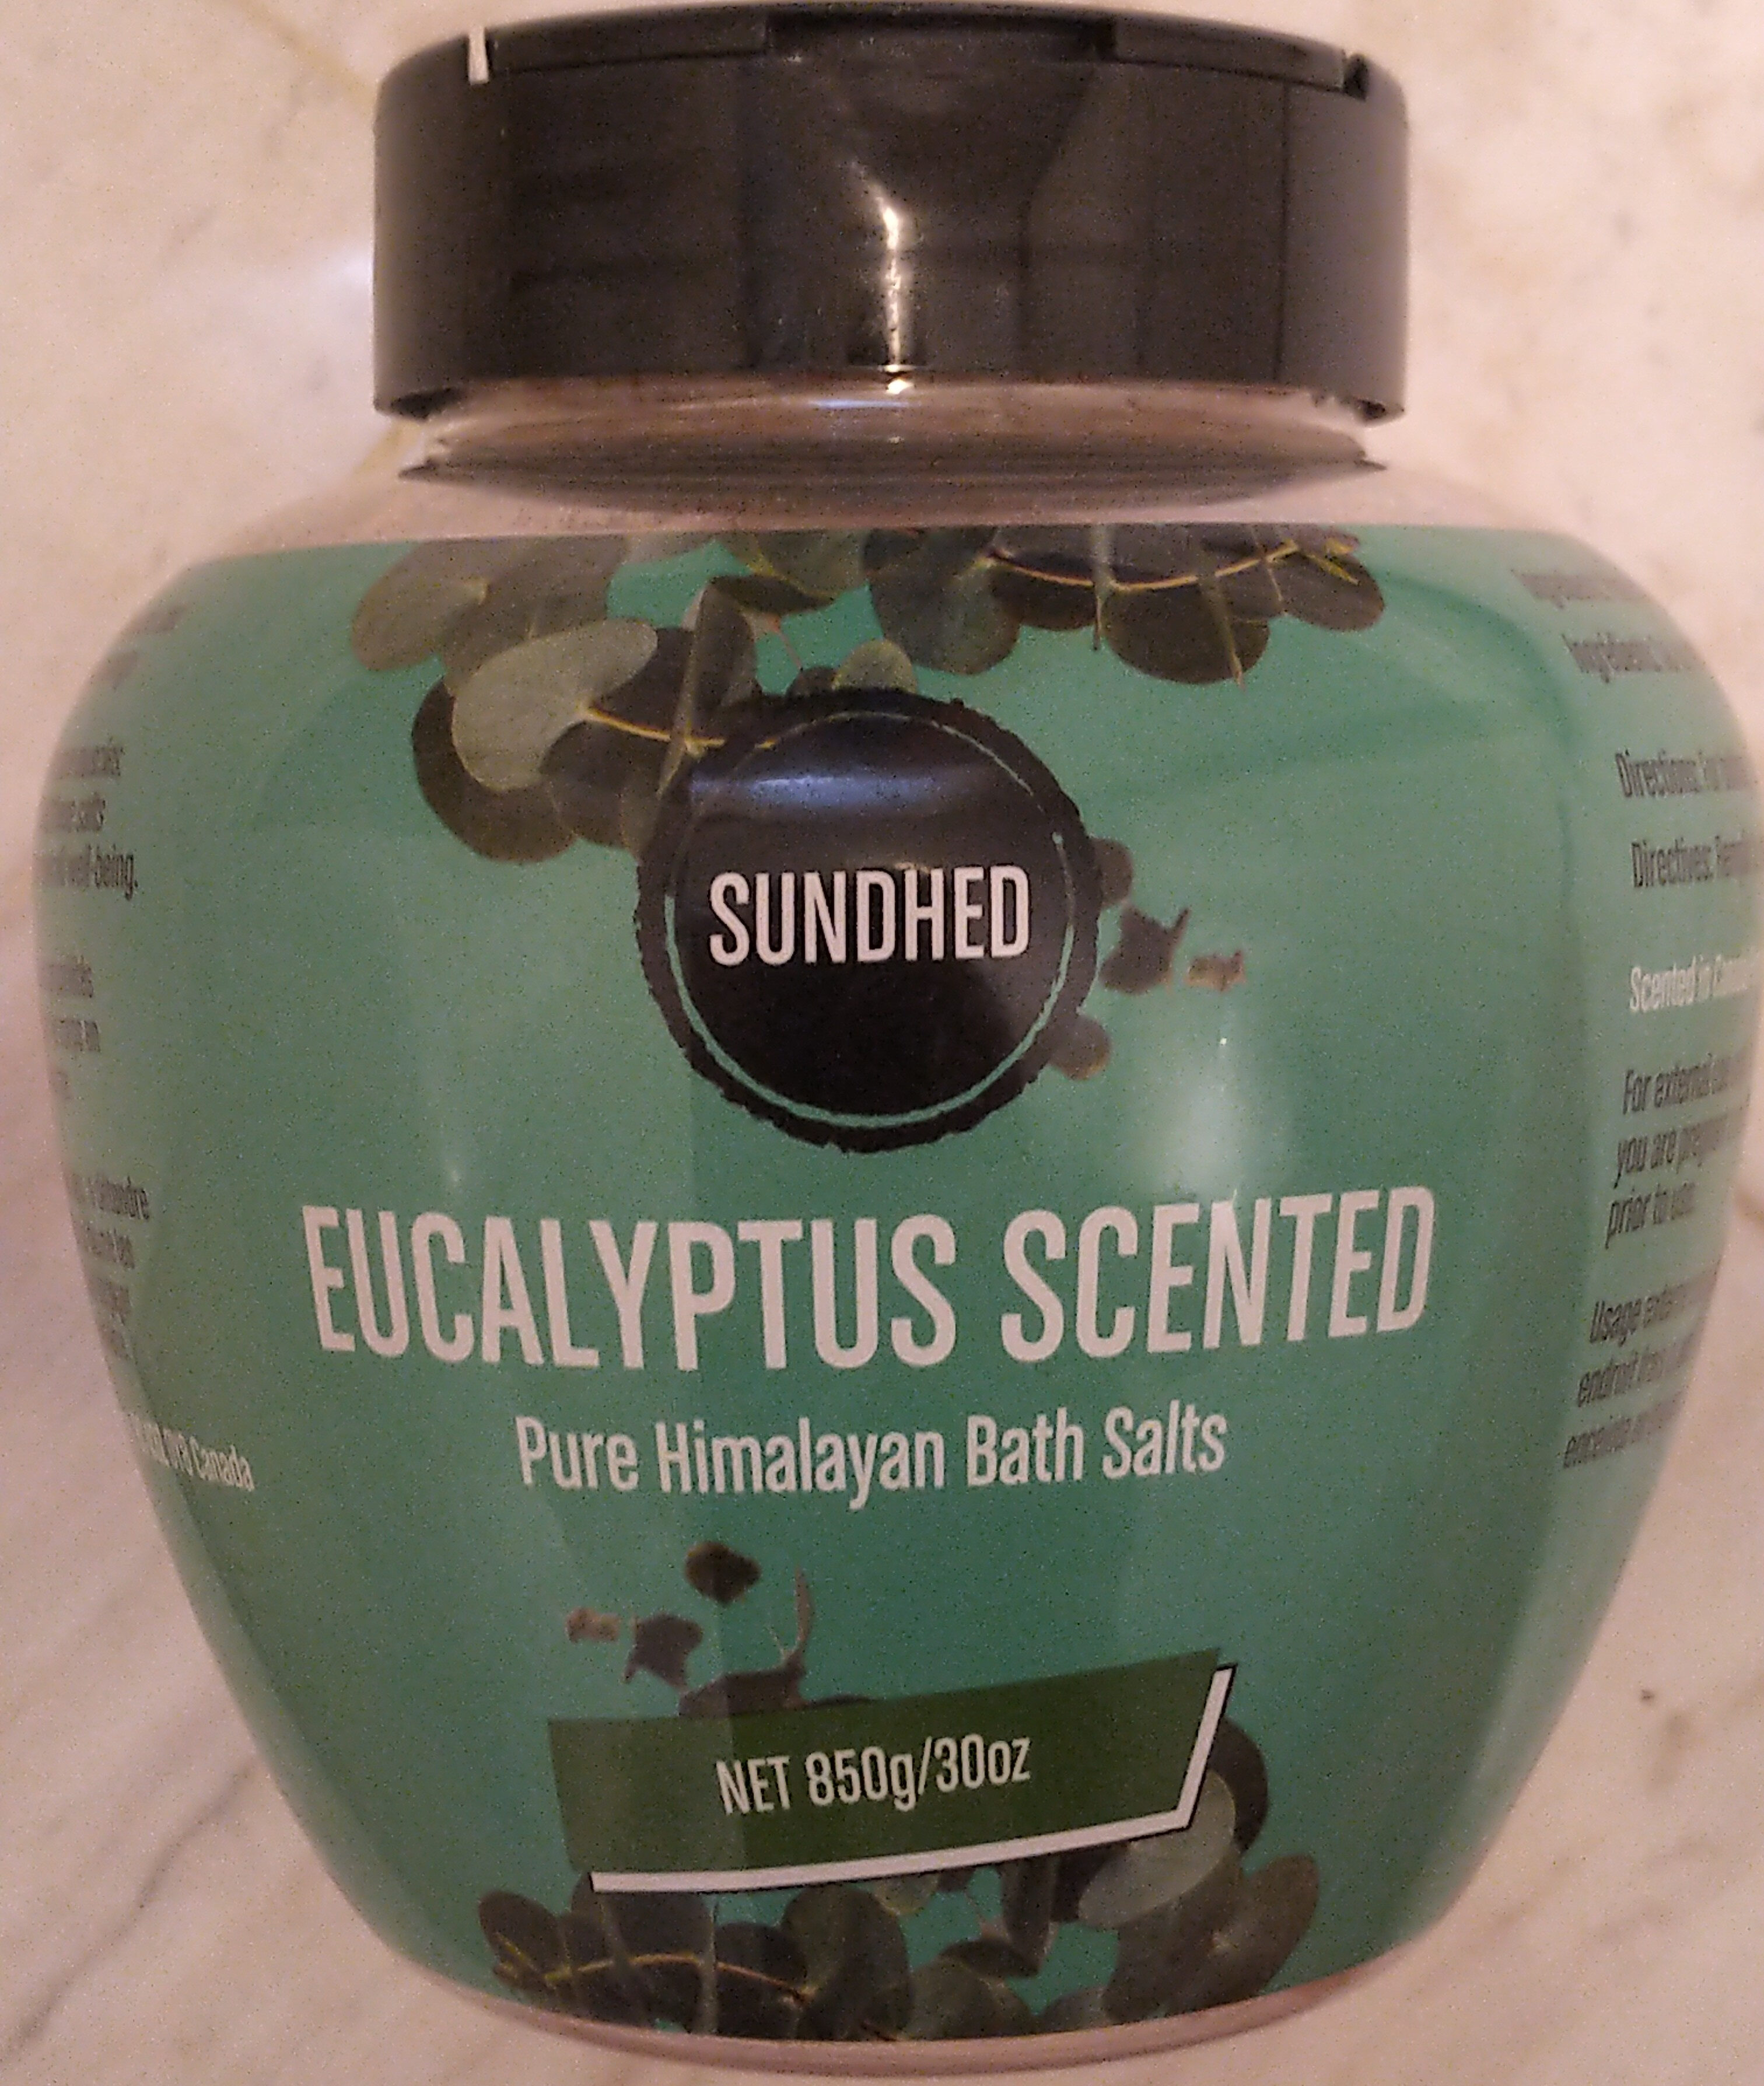 Eucalyptus Scented Pure Himalayan Bath Salts - Produto - en